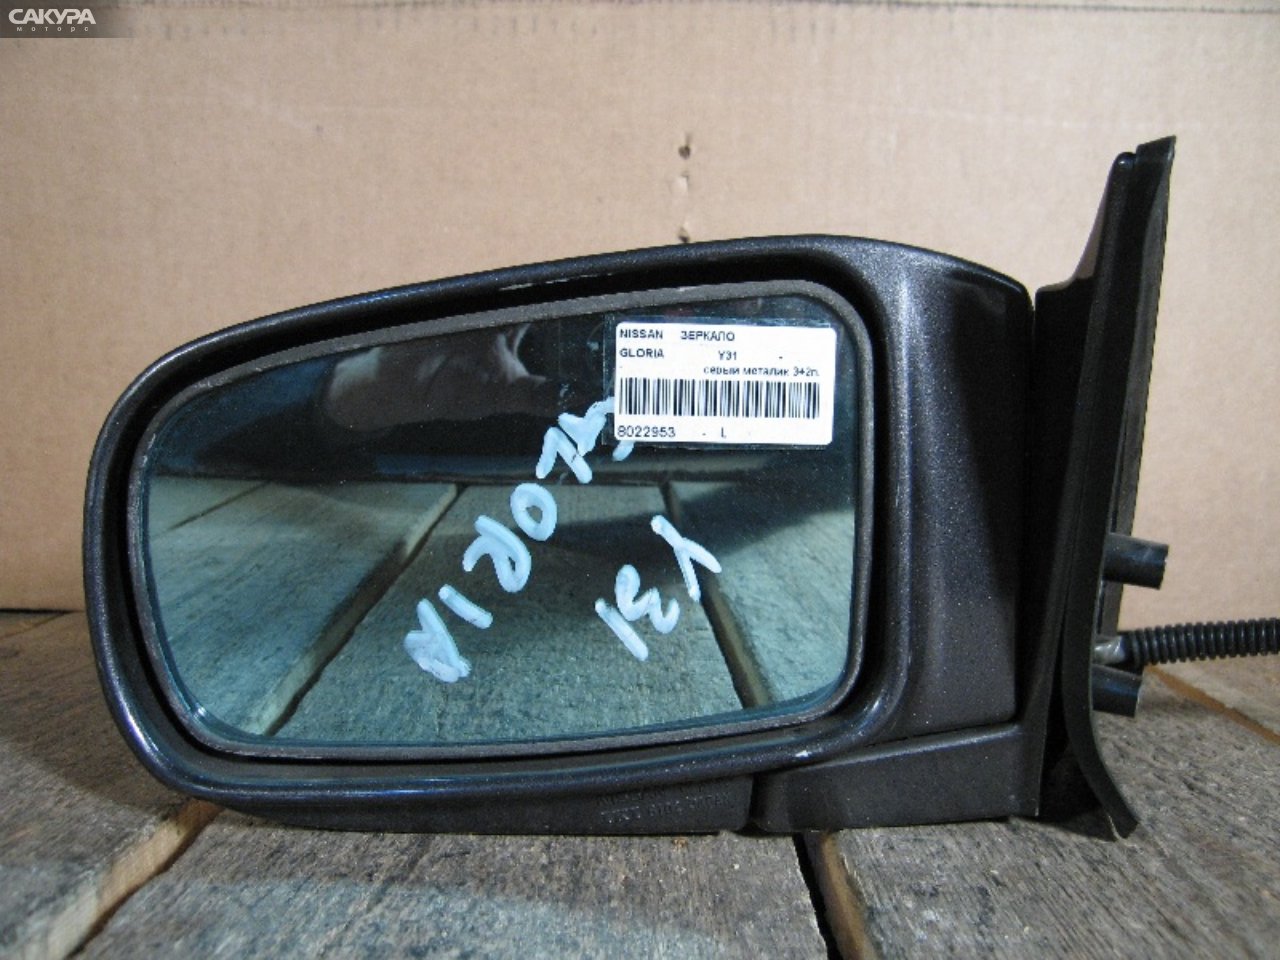 Зеркало боковое левое Nissan Gloria Y31: купить в Сакура Абакан.